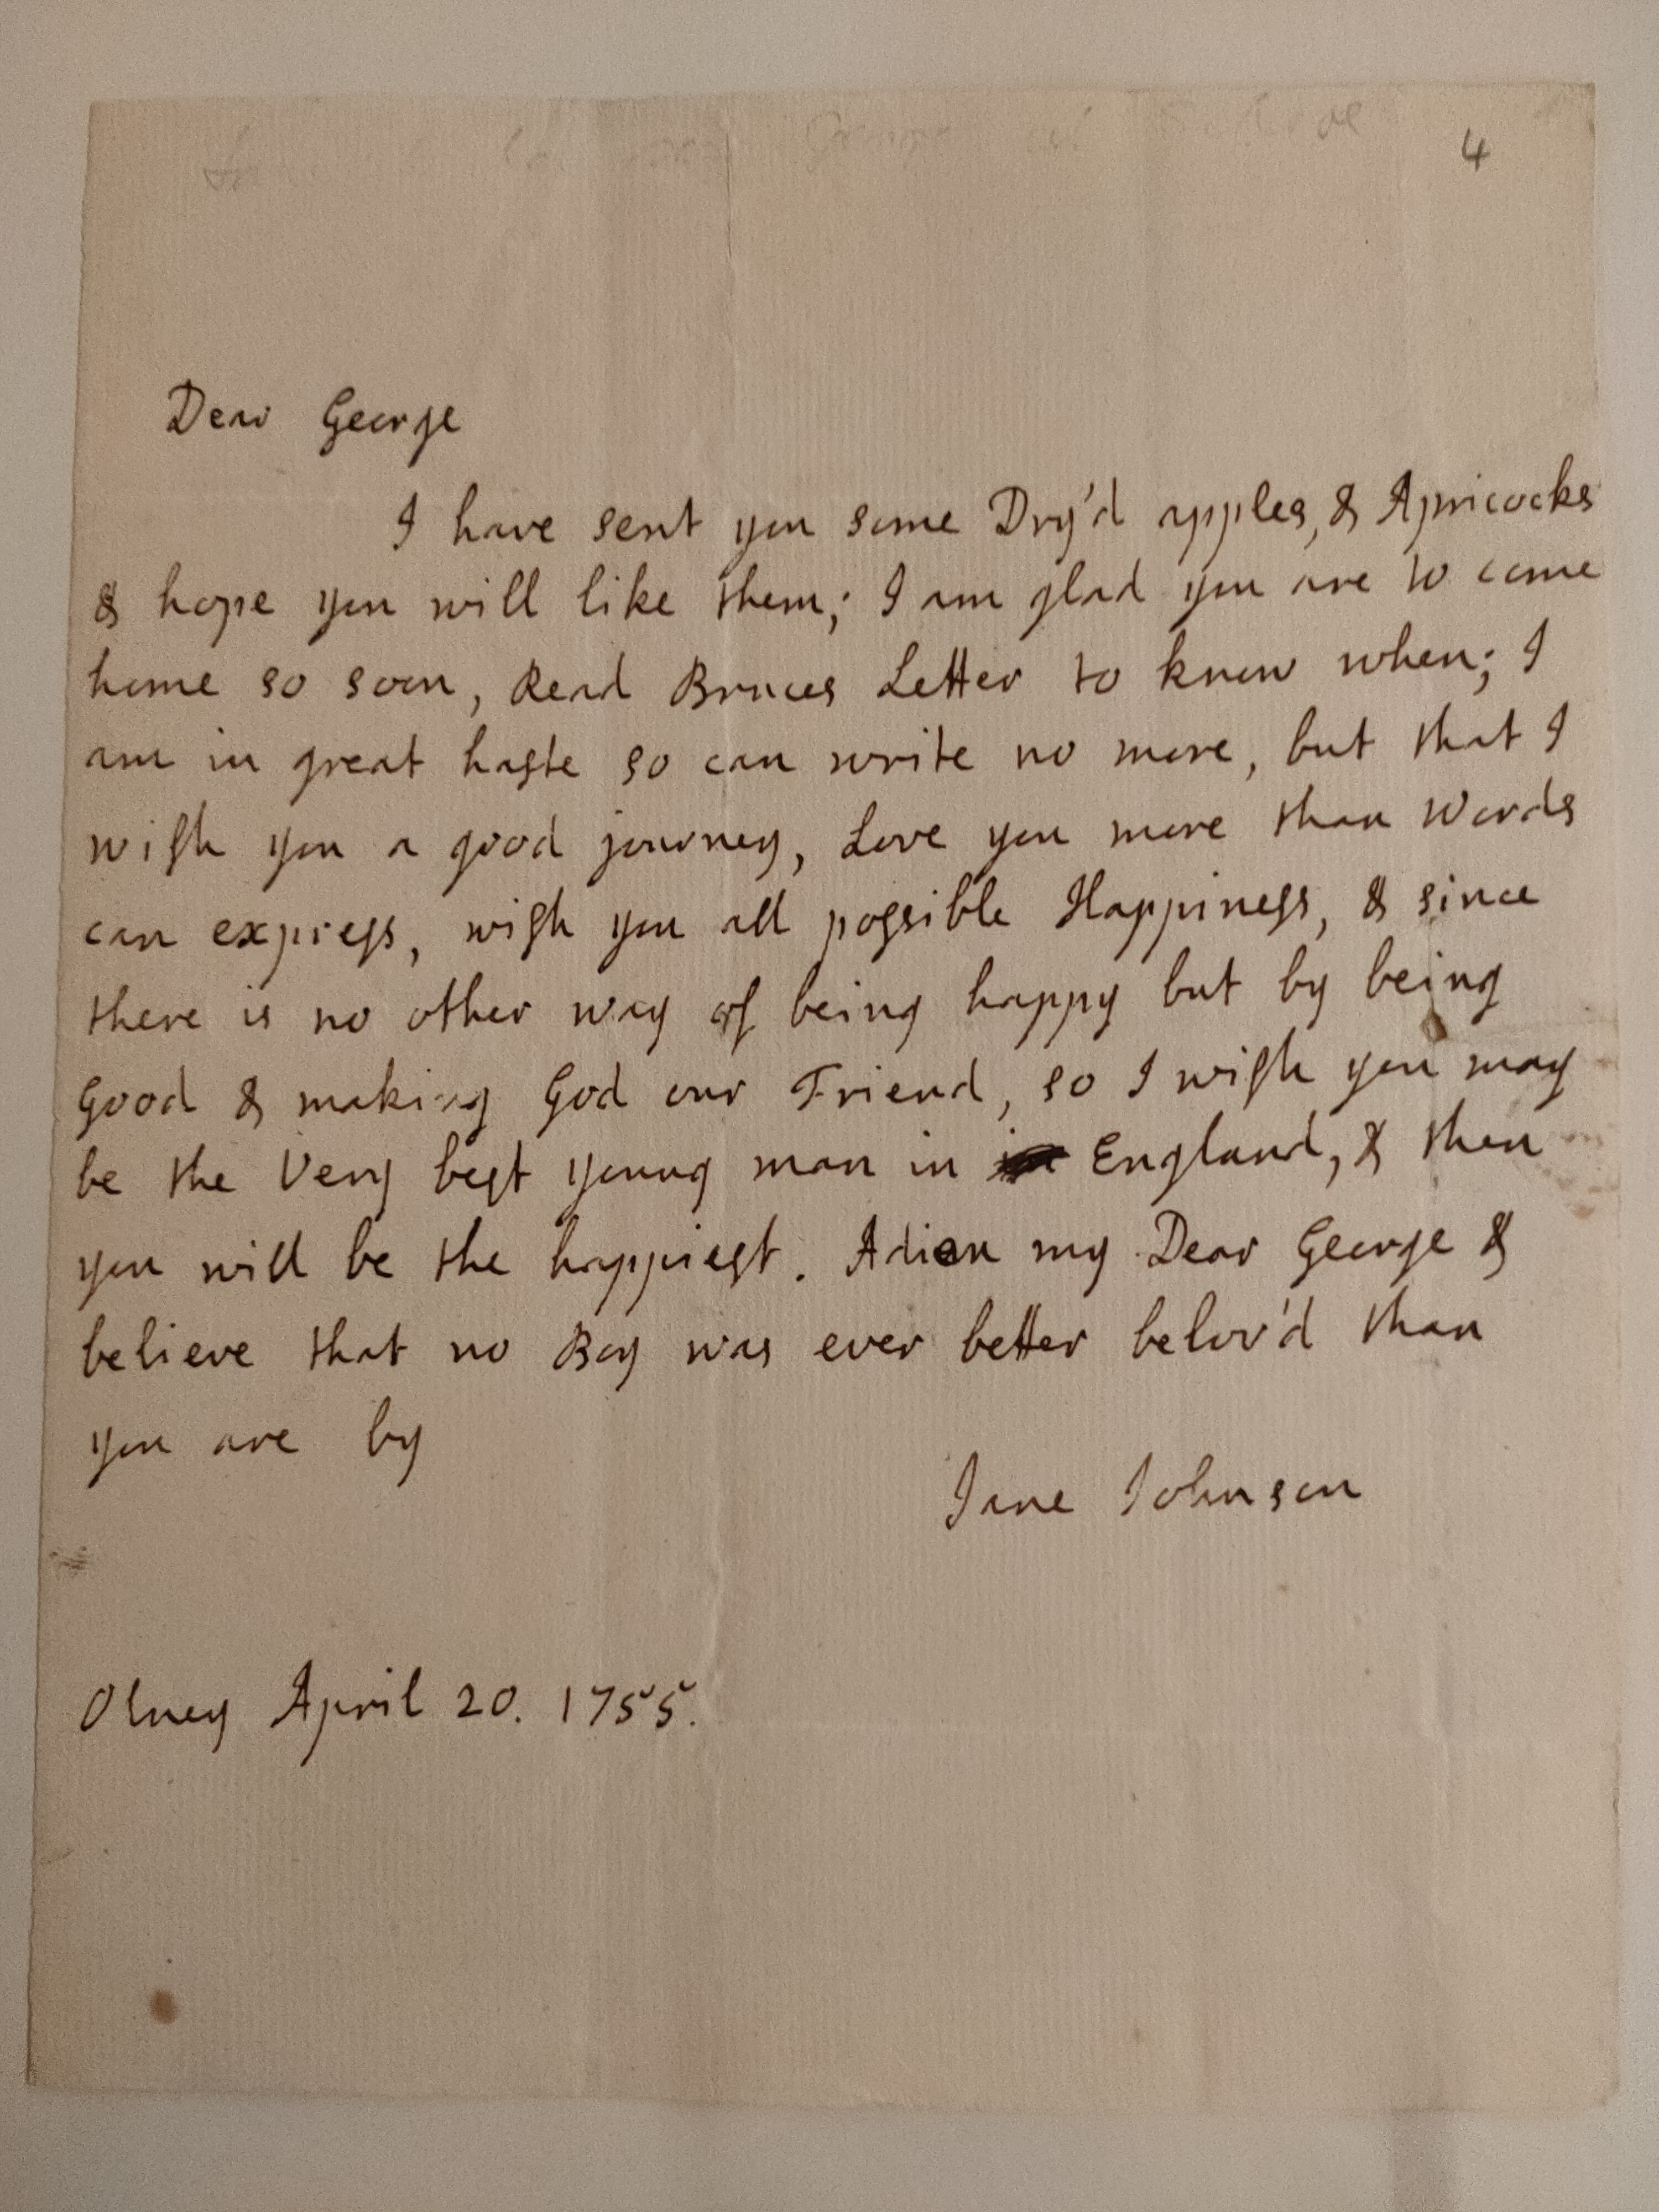 Image #1 of letter: Jane Johnson to George Johnson, 20 April 1755